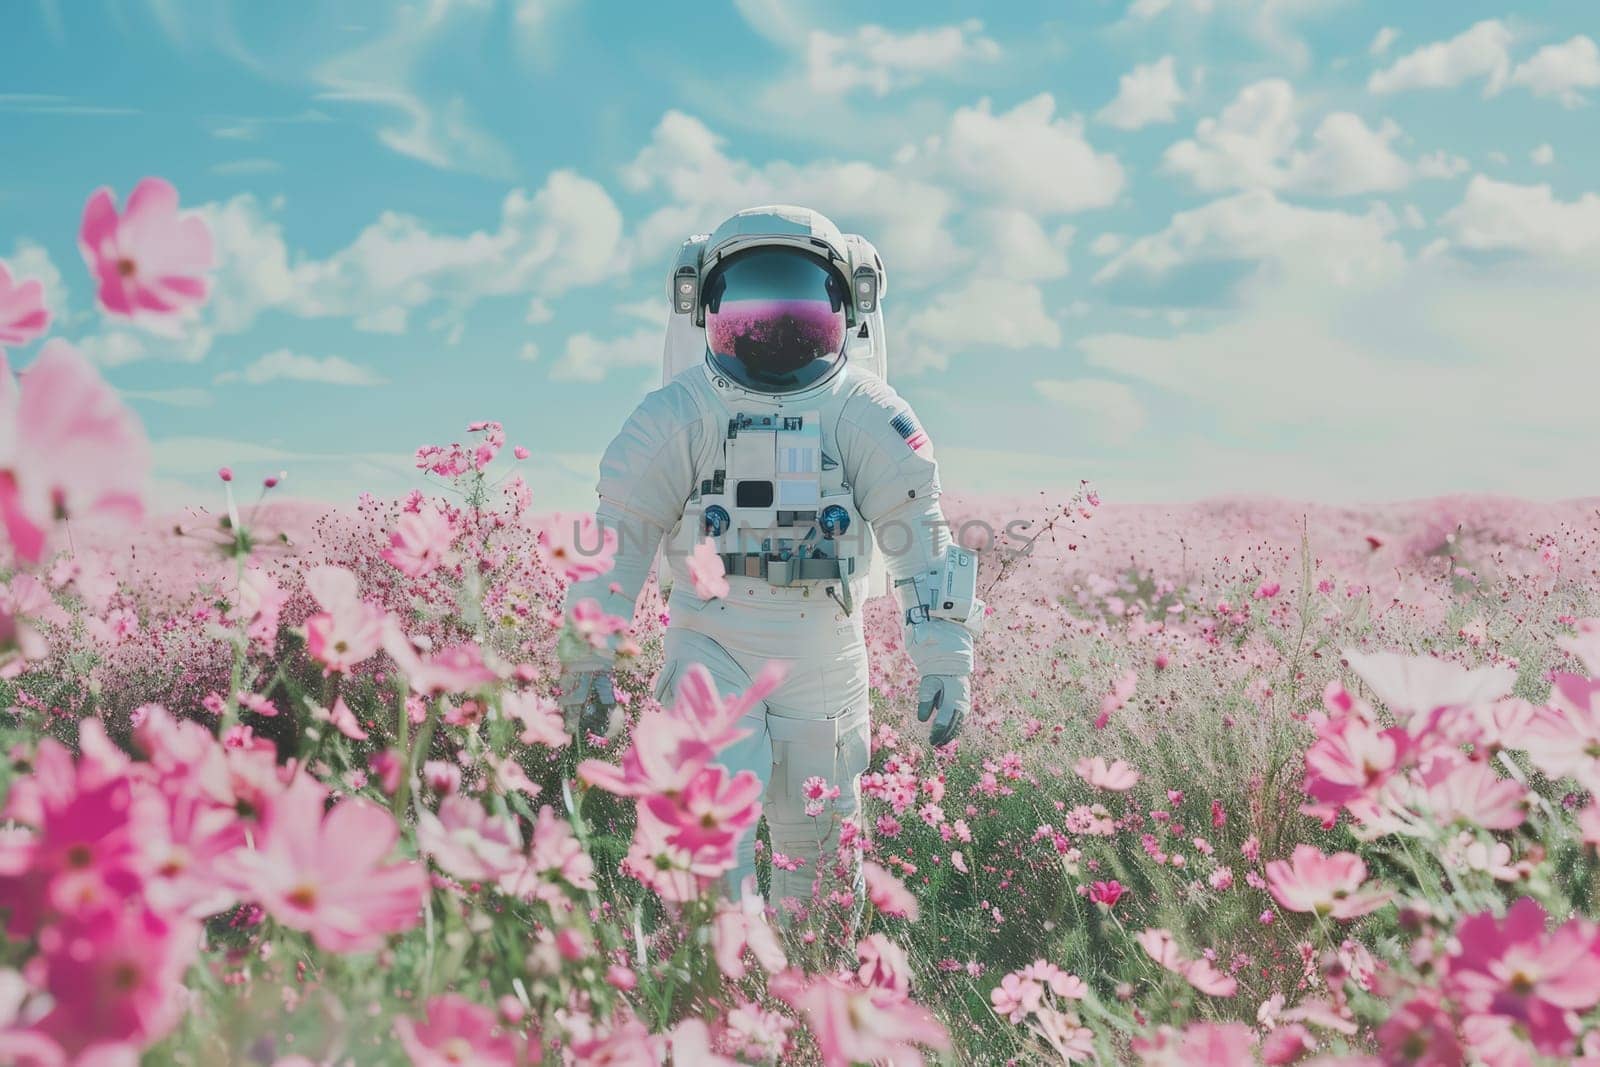 poster art an astronaut walking through a field full of pink flowers, backgrounds or wallpaper.